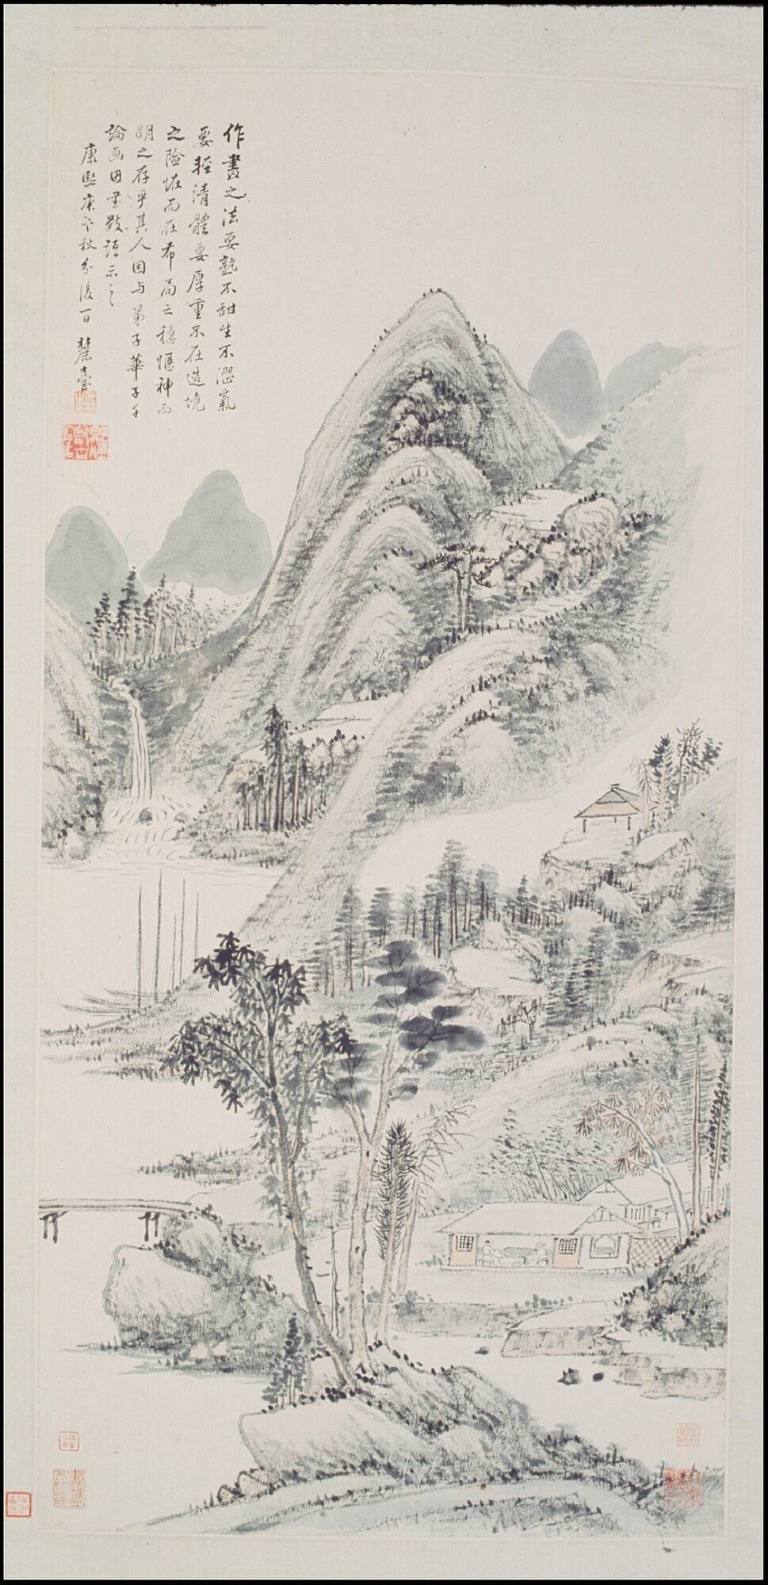 Copy of Wang Yuan-ch'i/Yuanqi (1642-1715) 1690 Landscape and Inscription